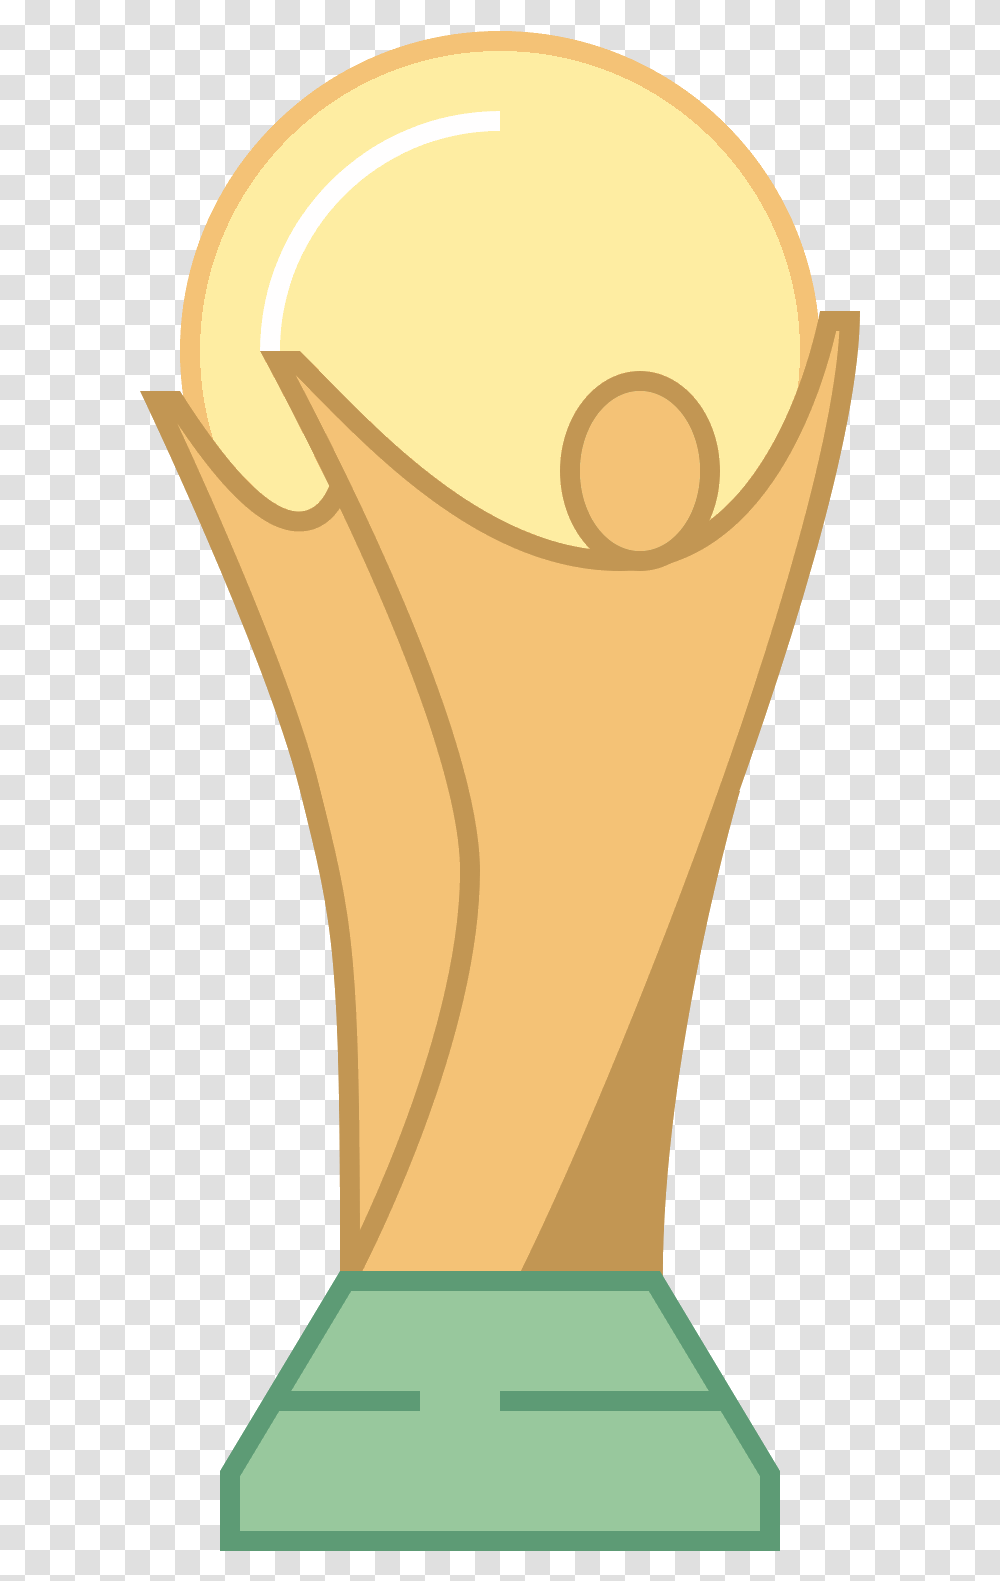 World Cup Vector Download Illustration, Light, Torch, Arm, Saxophone Transparent Png